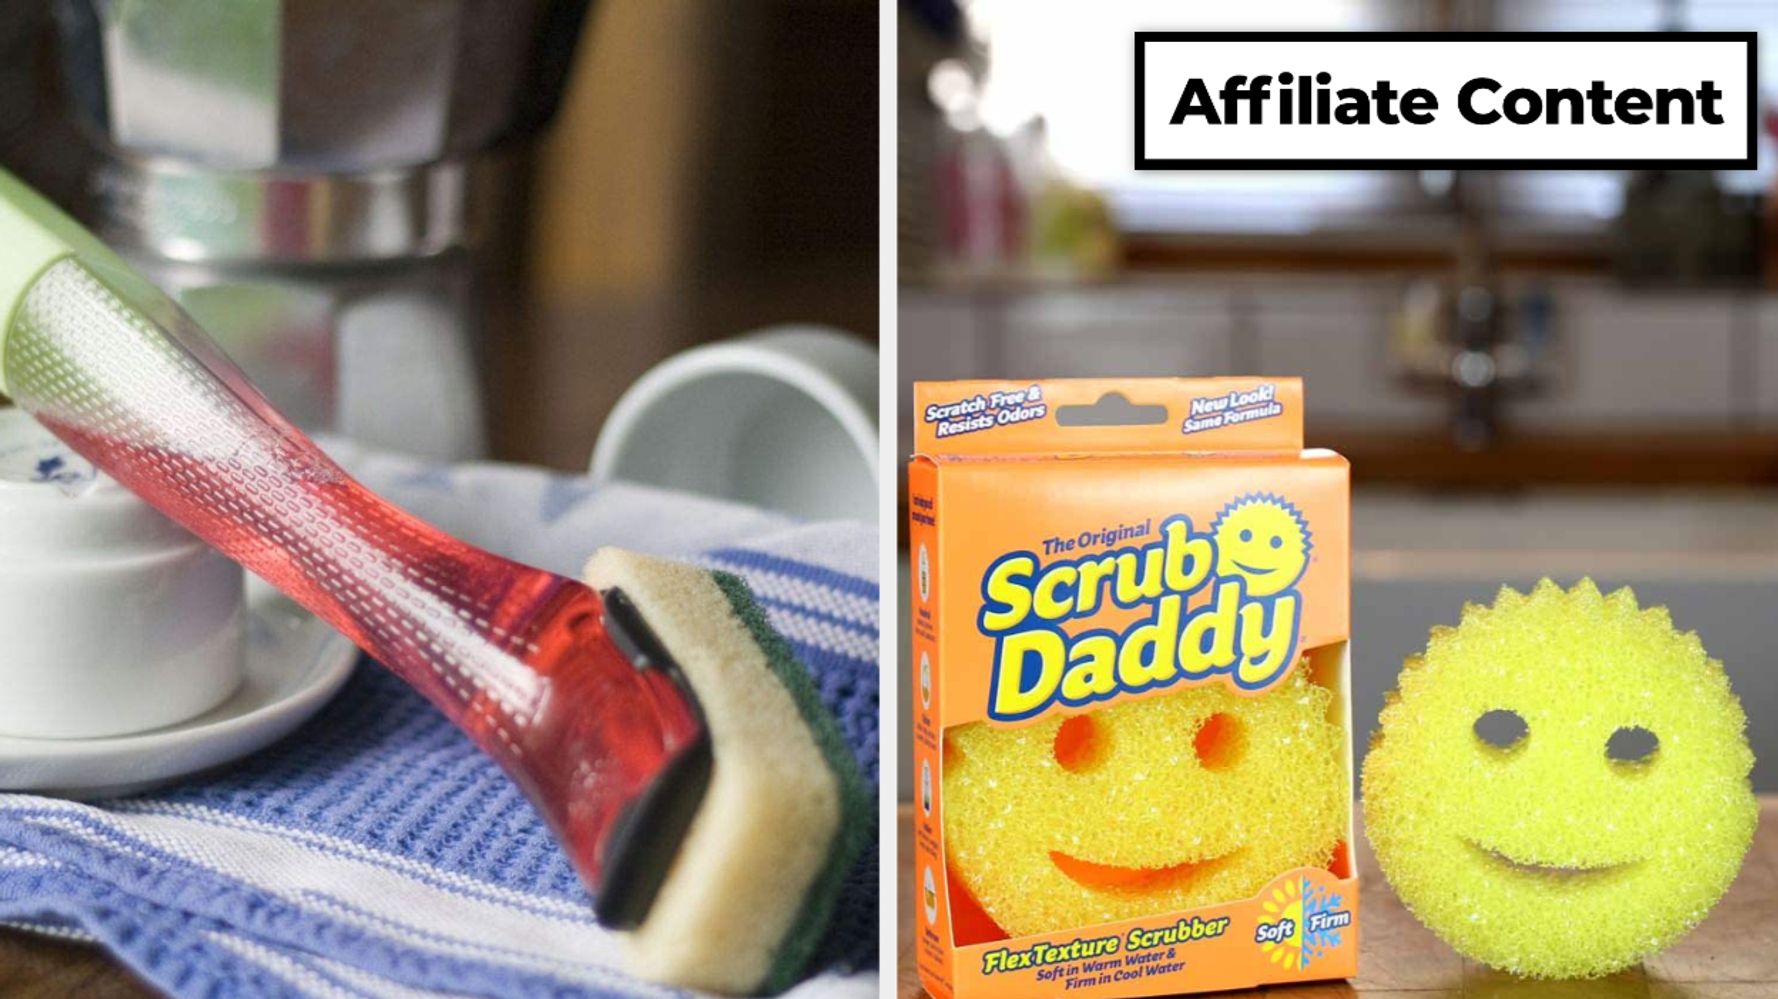 the original scrub daddy® flex texture® scrubber